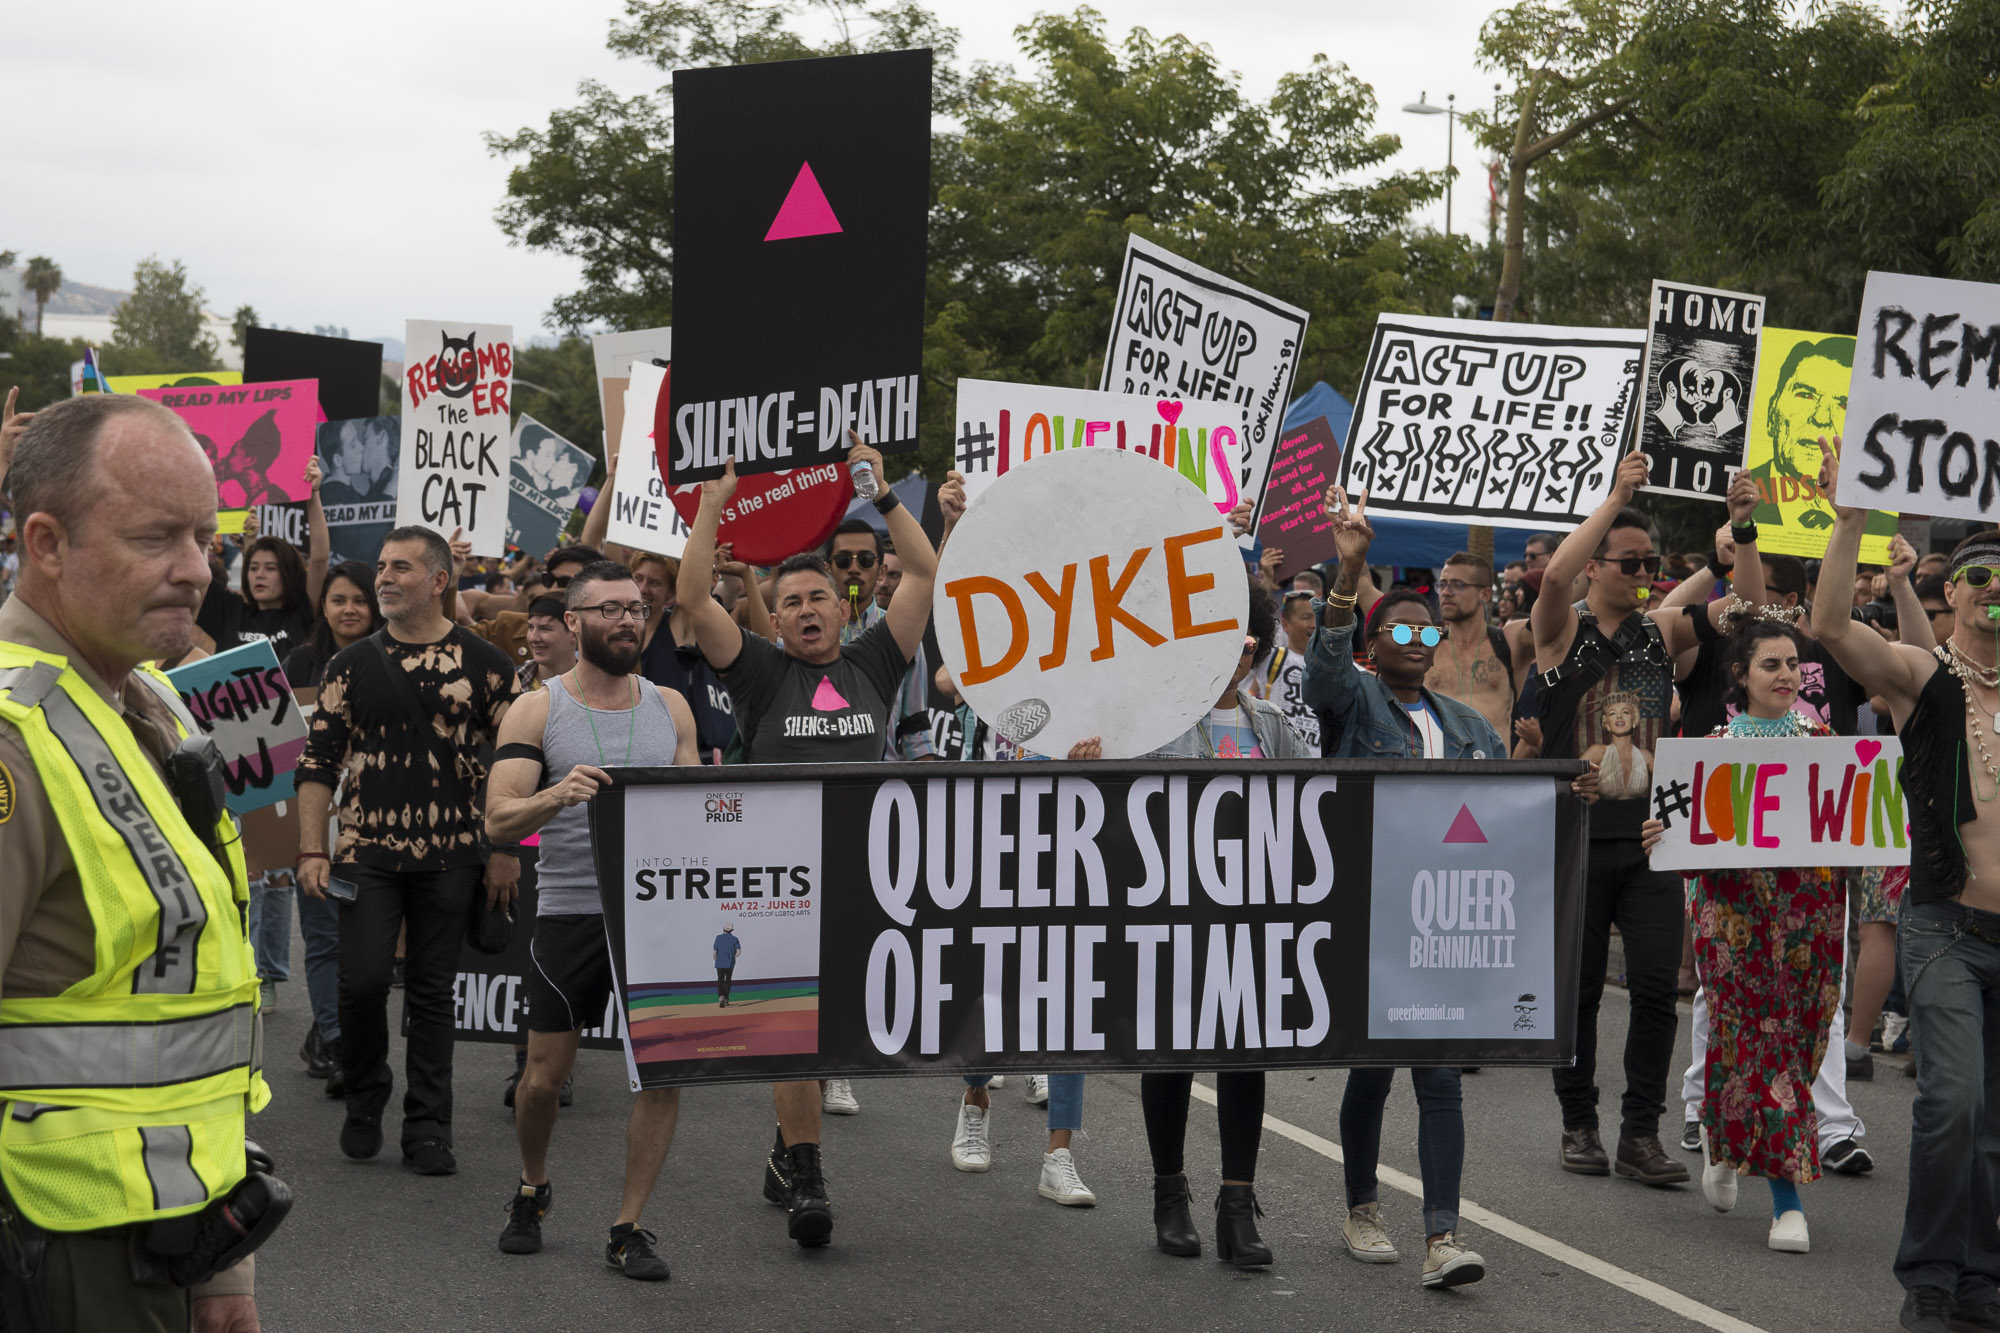 Marchers for Queer Biennial, an art exhibit that opens June 28 in Los Angeles. (Photo by Derek Wear of Unikorn Photography)